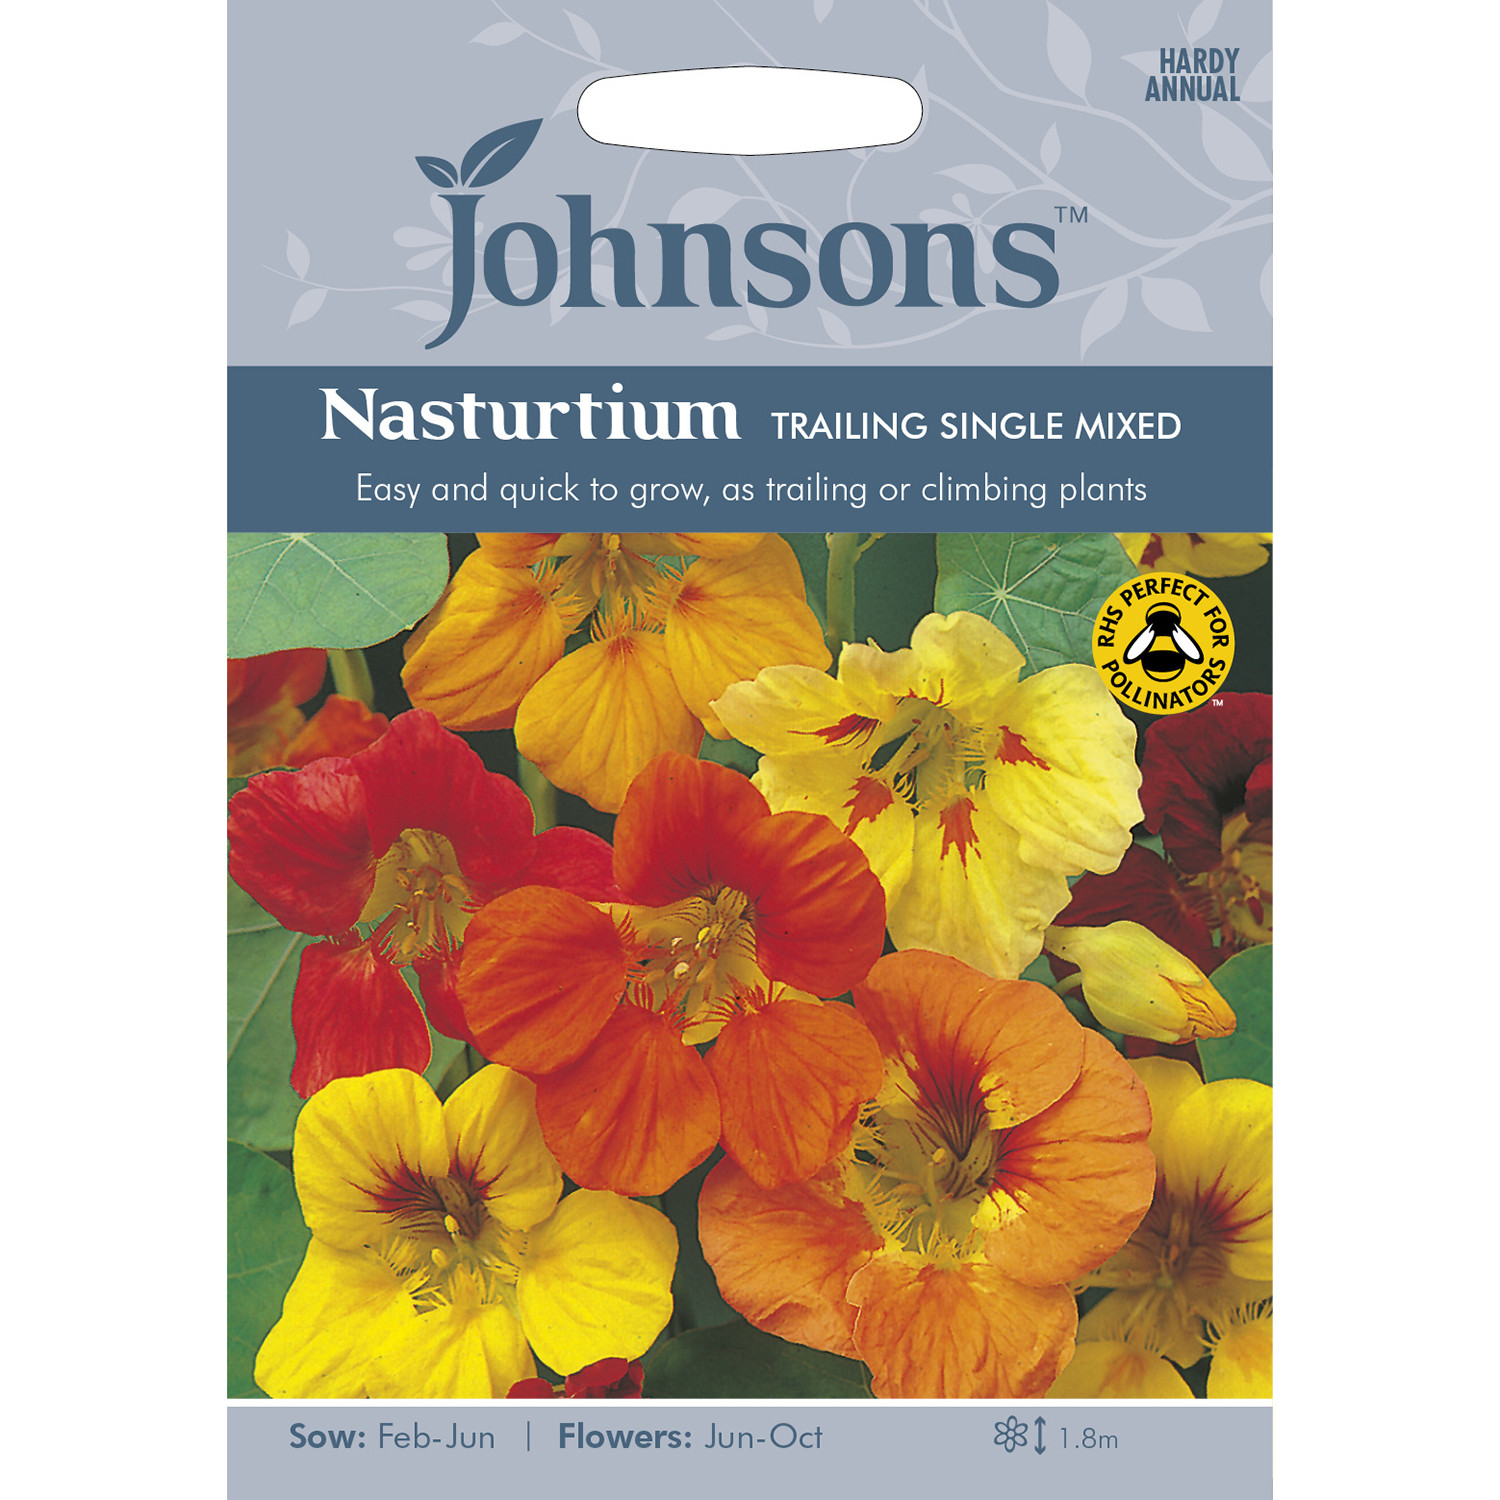 Johnsons Nasturtium Trailing Single Mixed Flower Seeds Image 2